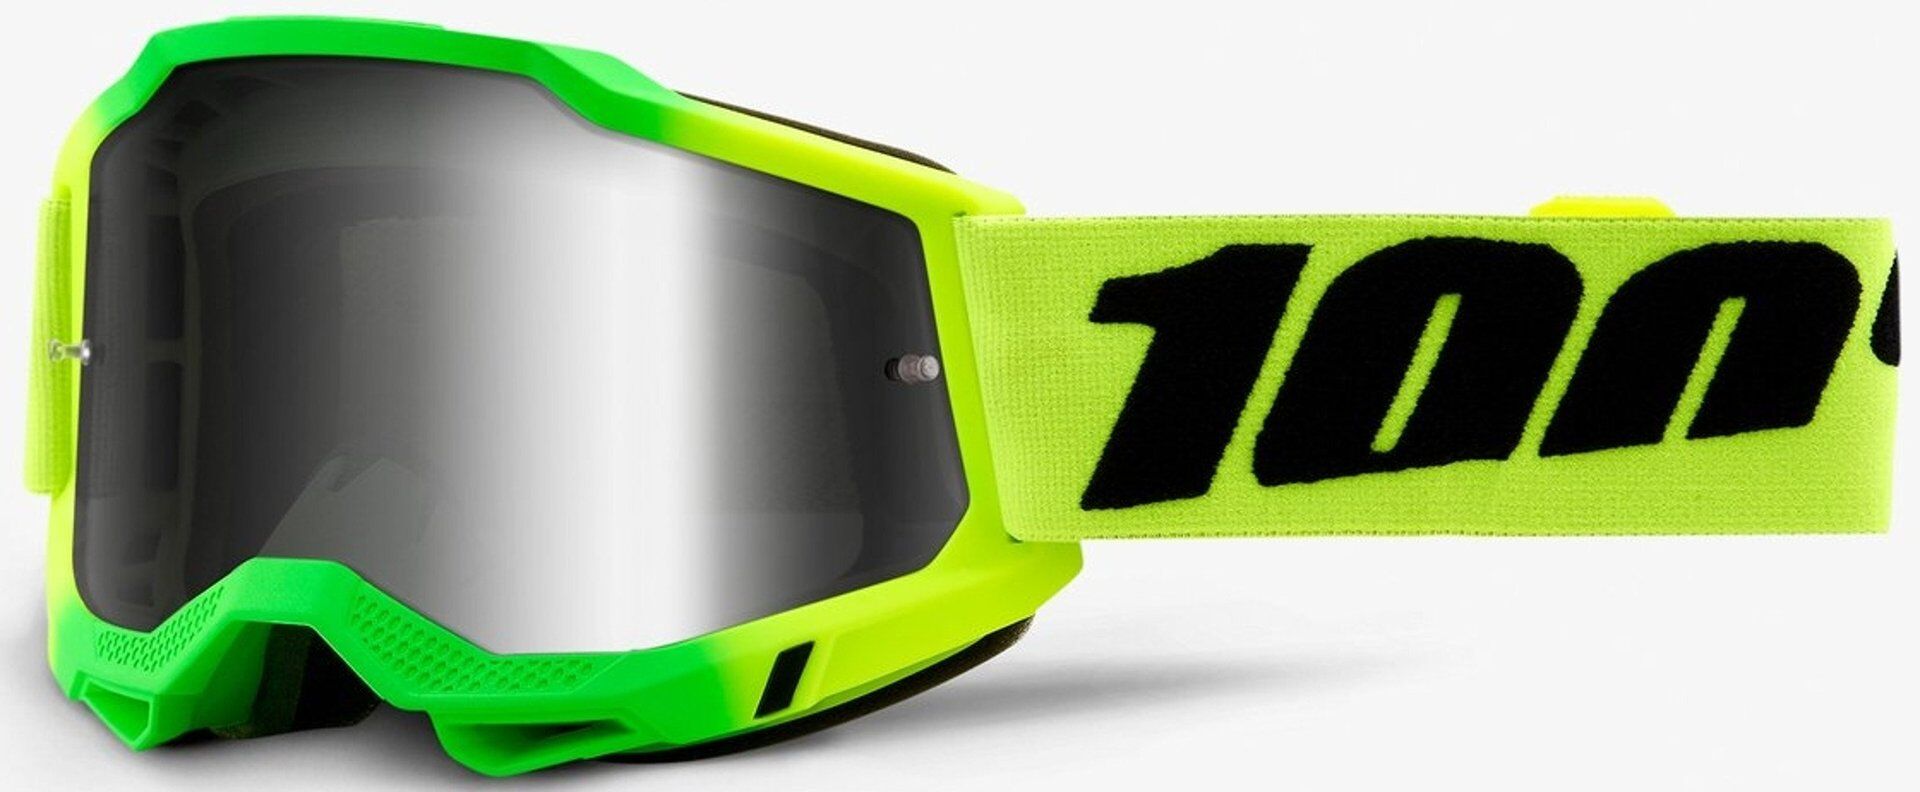 100% Accuri 2 Extra Travis Motocross Goggles  - Green Yellow